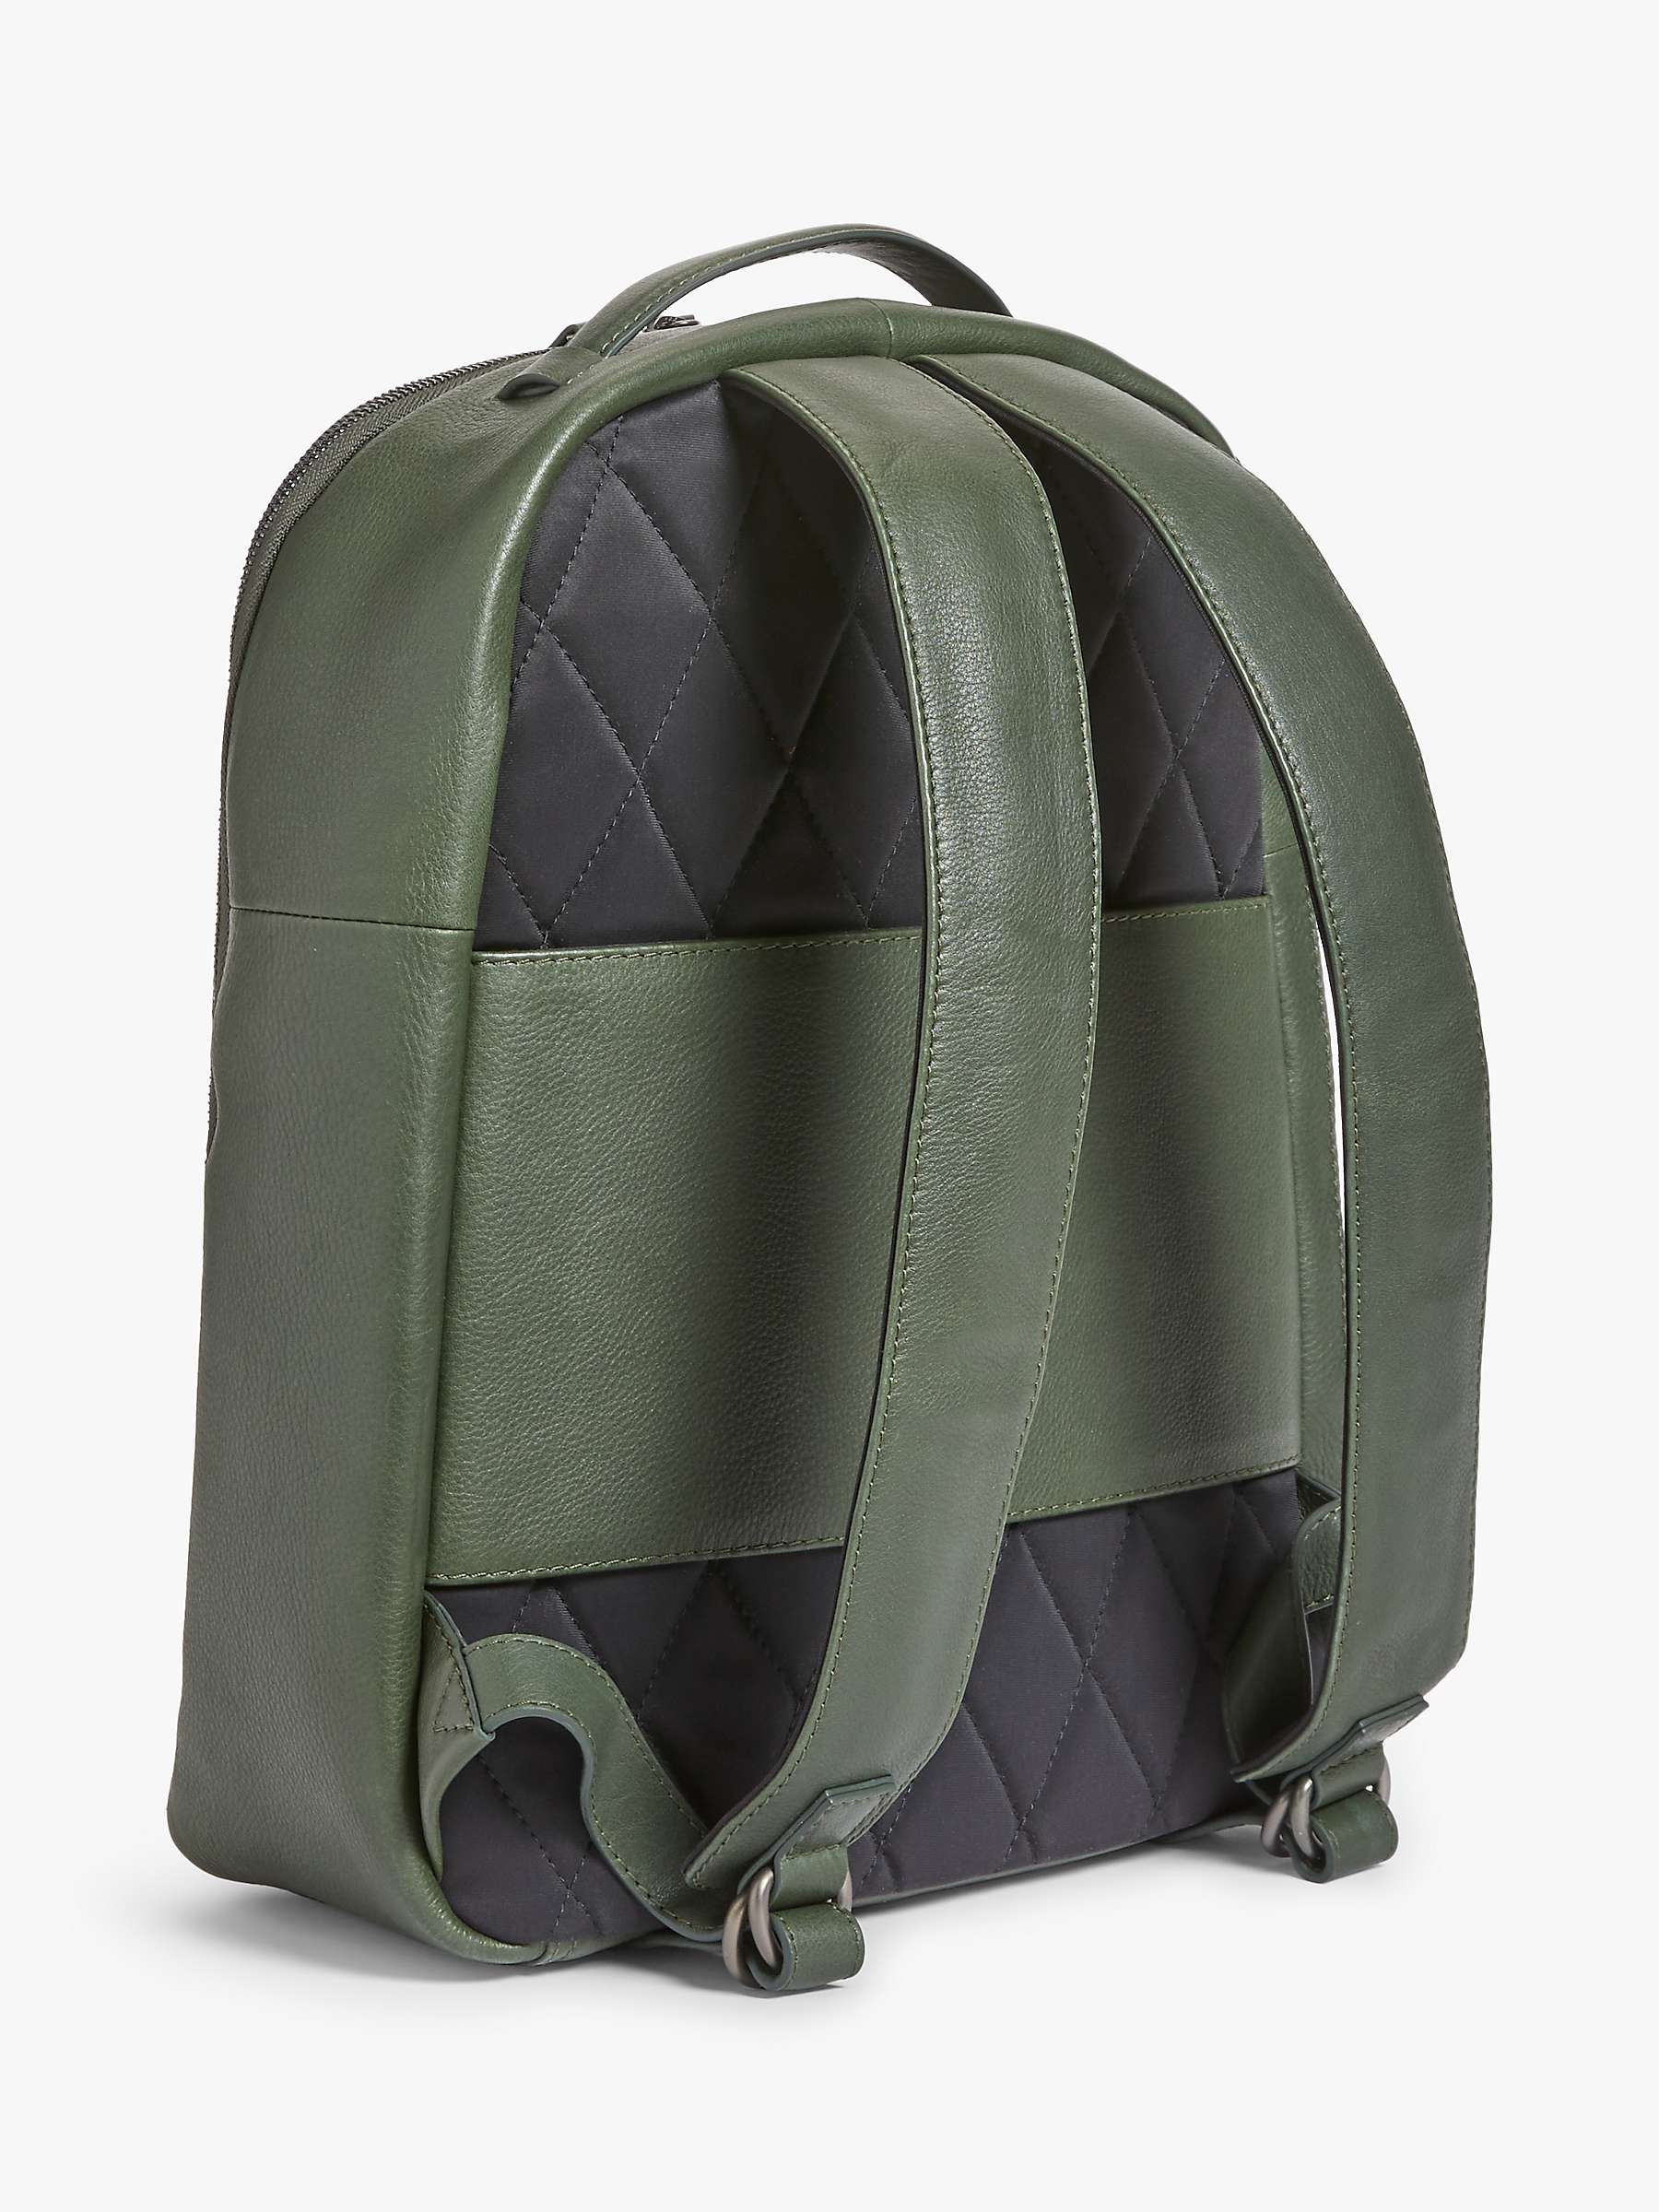 Buy John Lewis Oslo Leather Backpack Online at johnlewis.com